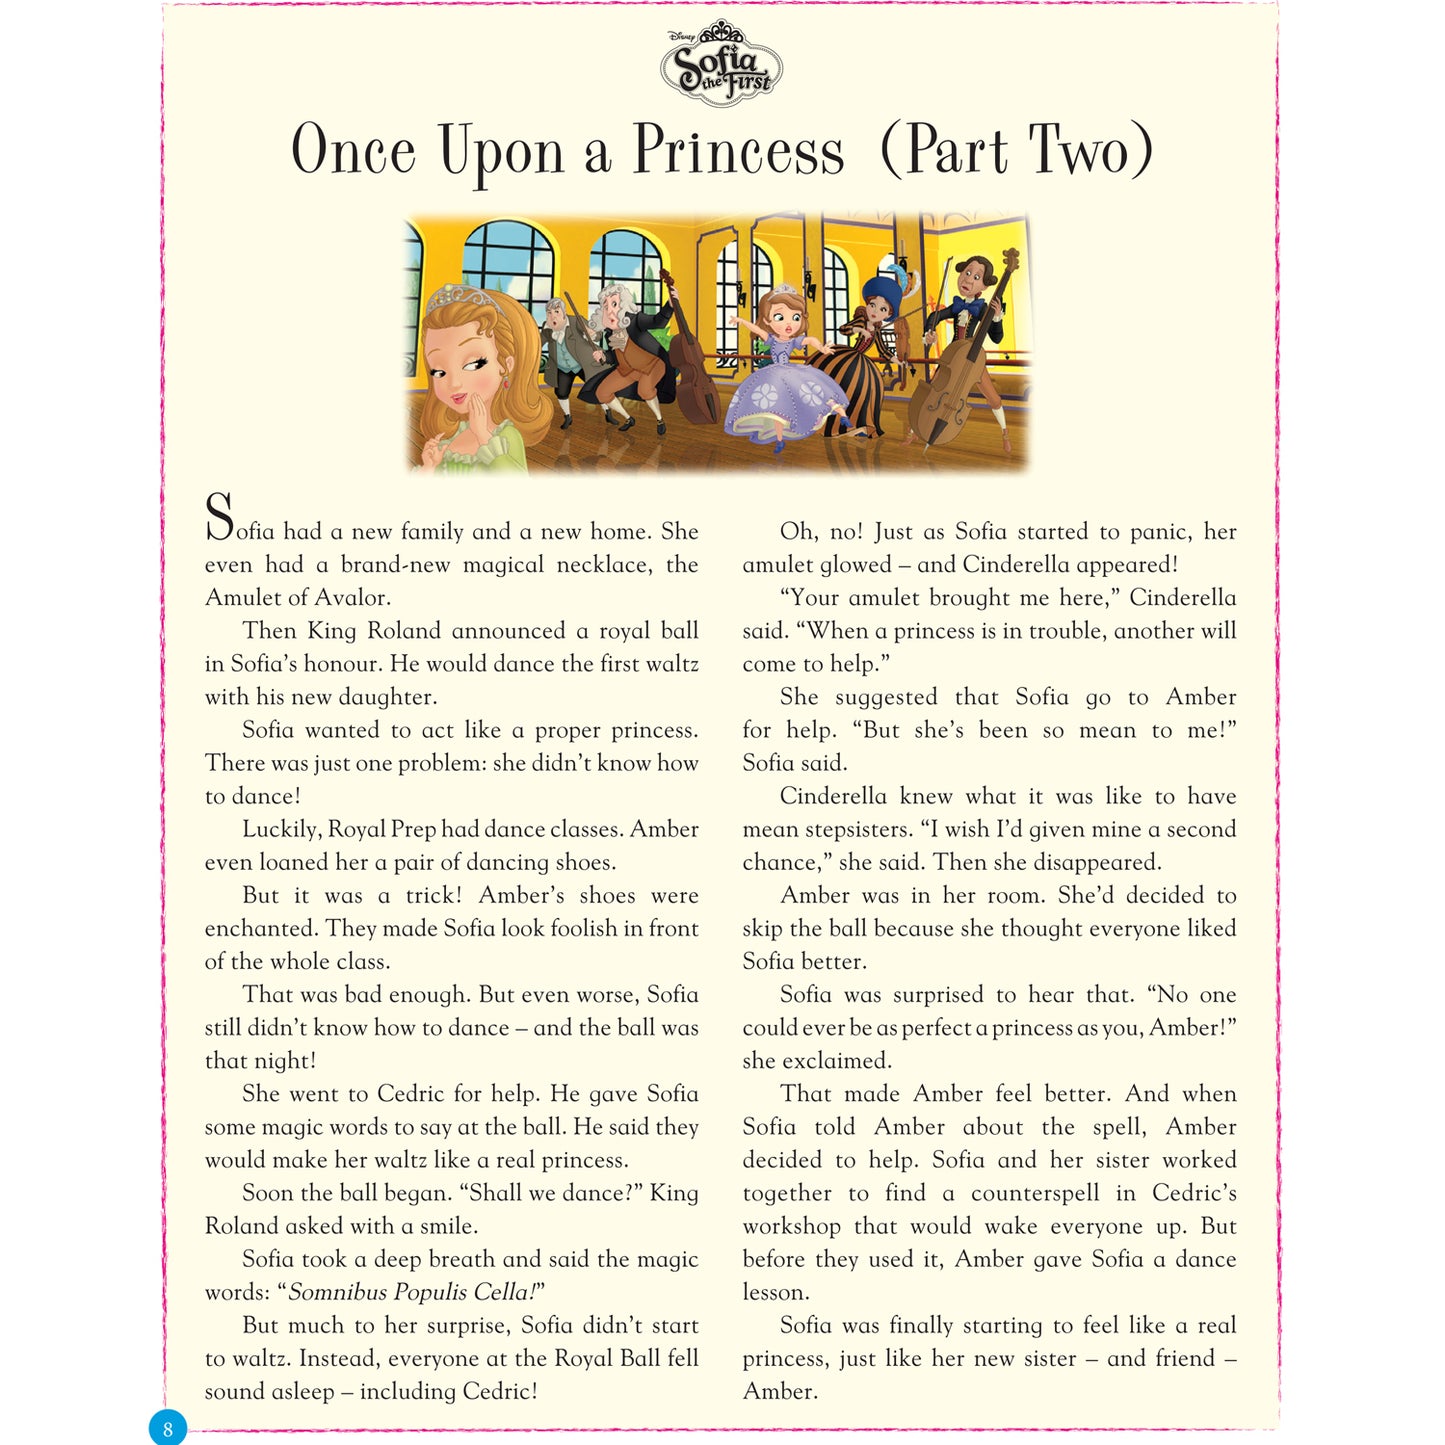 Disney Junior 100 Stories By Parragon Books